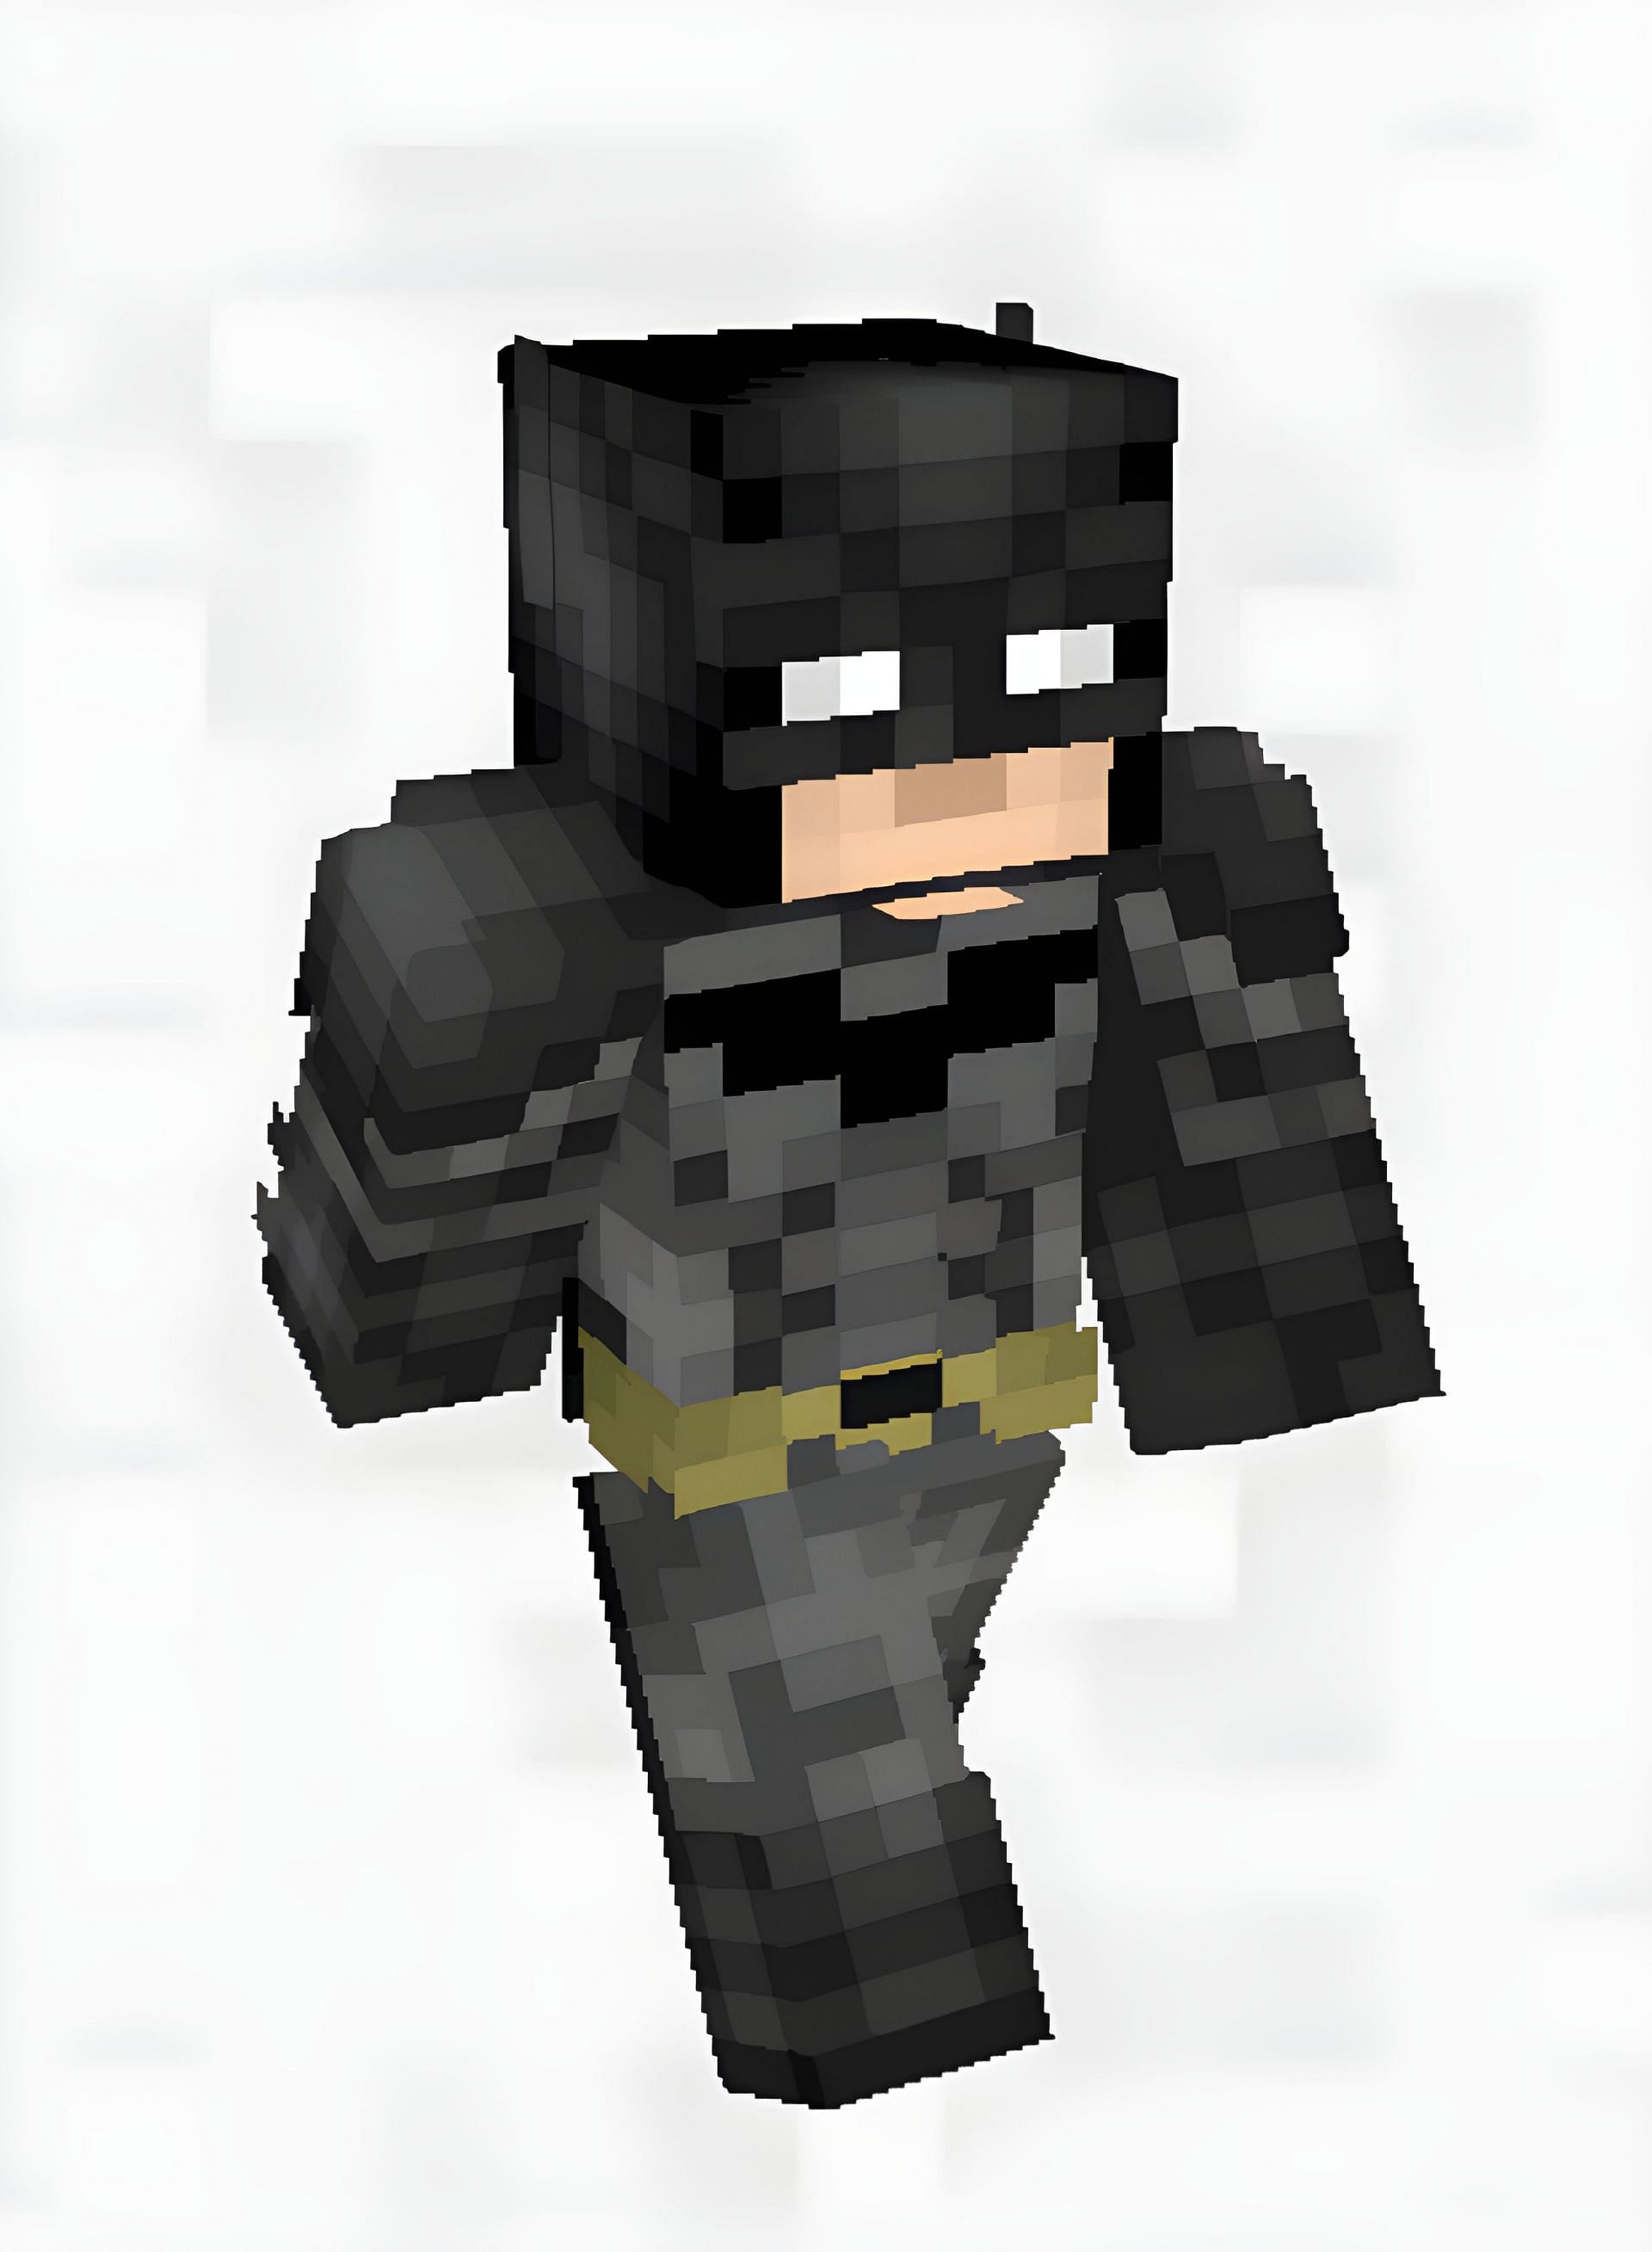 The Batman PvP skin (Image via SkinsMC)